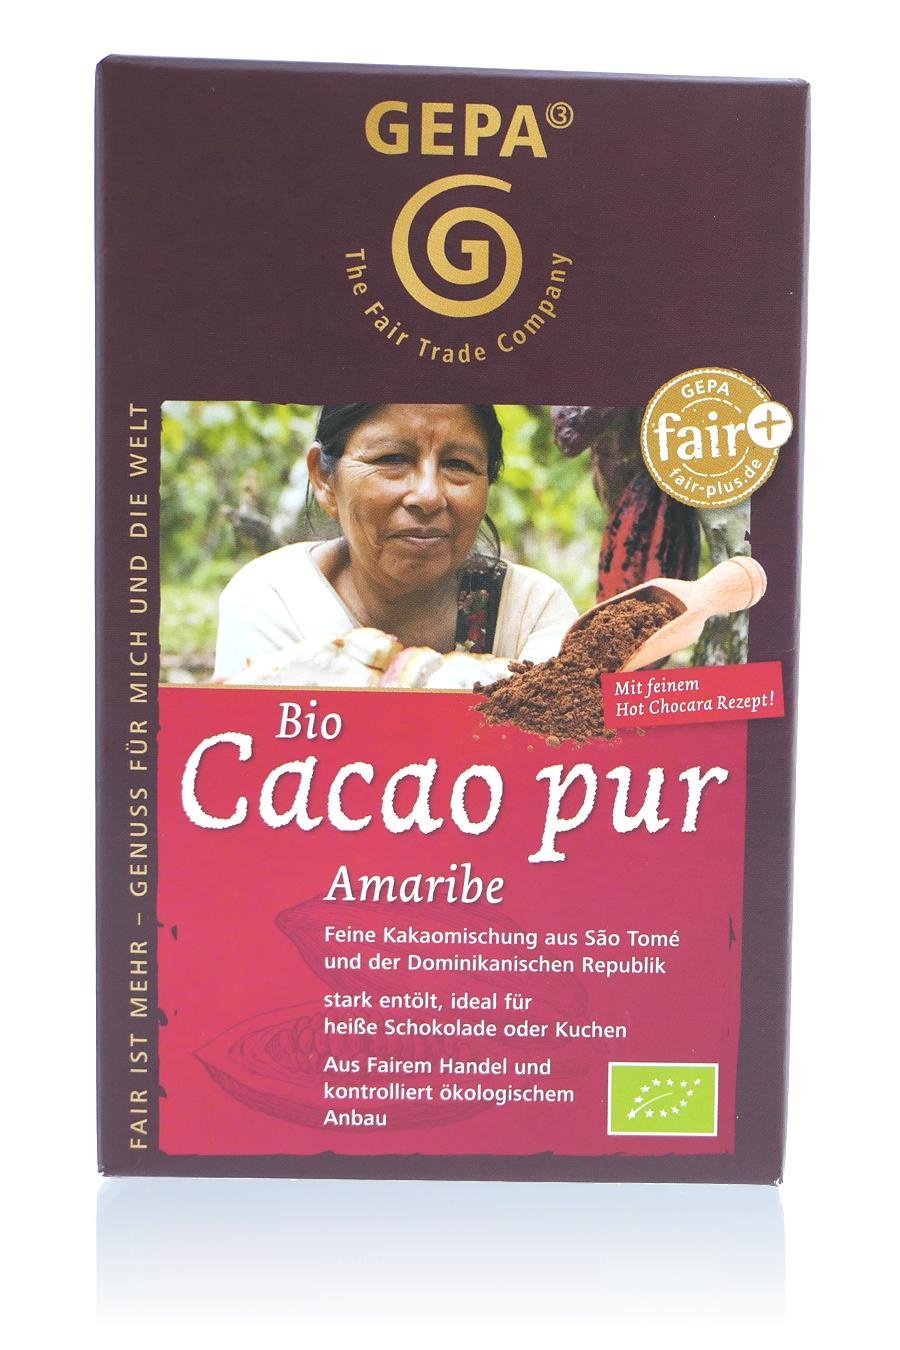 Cacao Pur Amaribe (c) M. Kerk